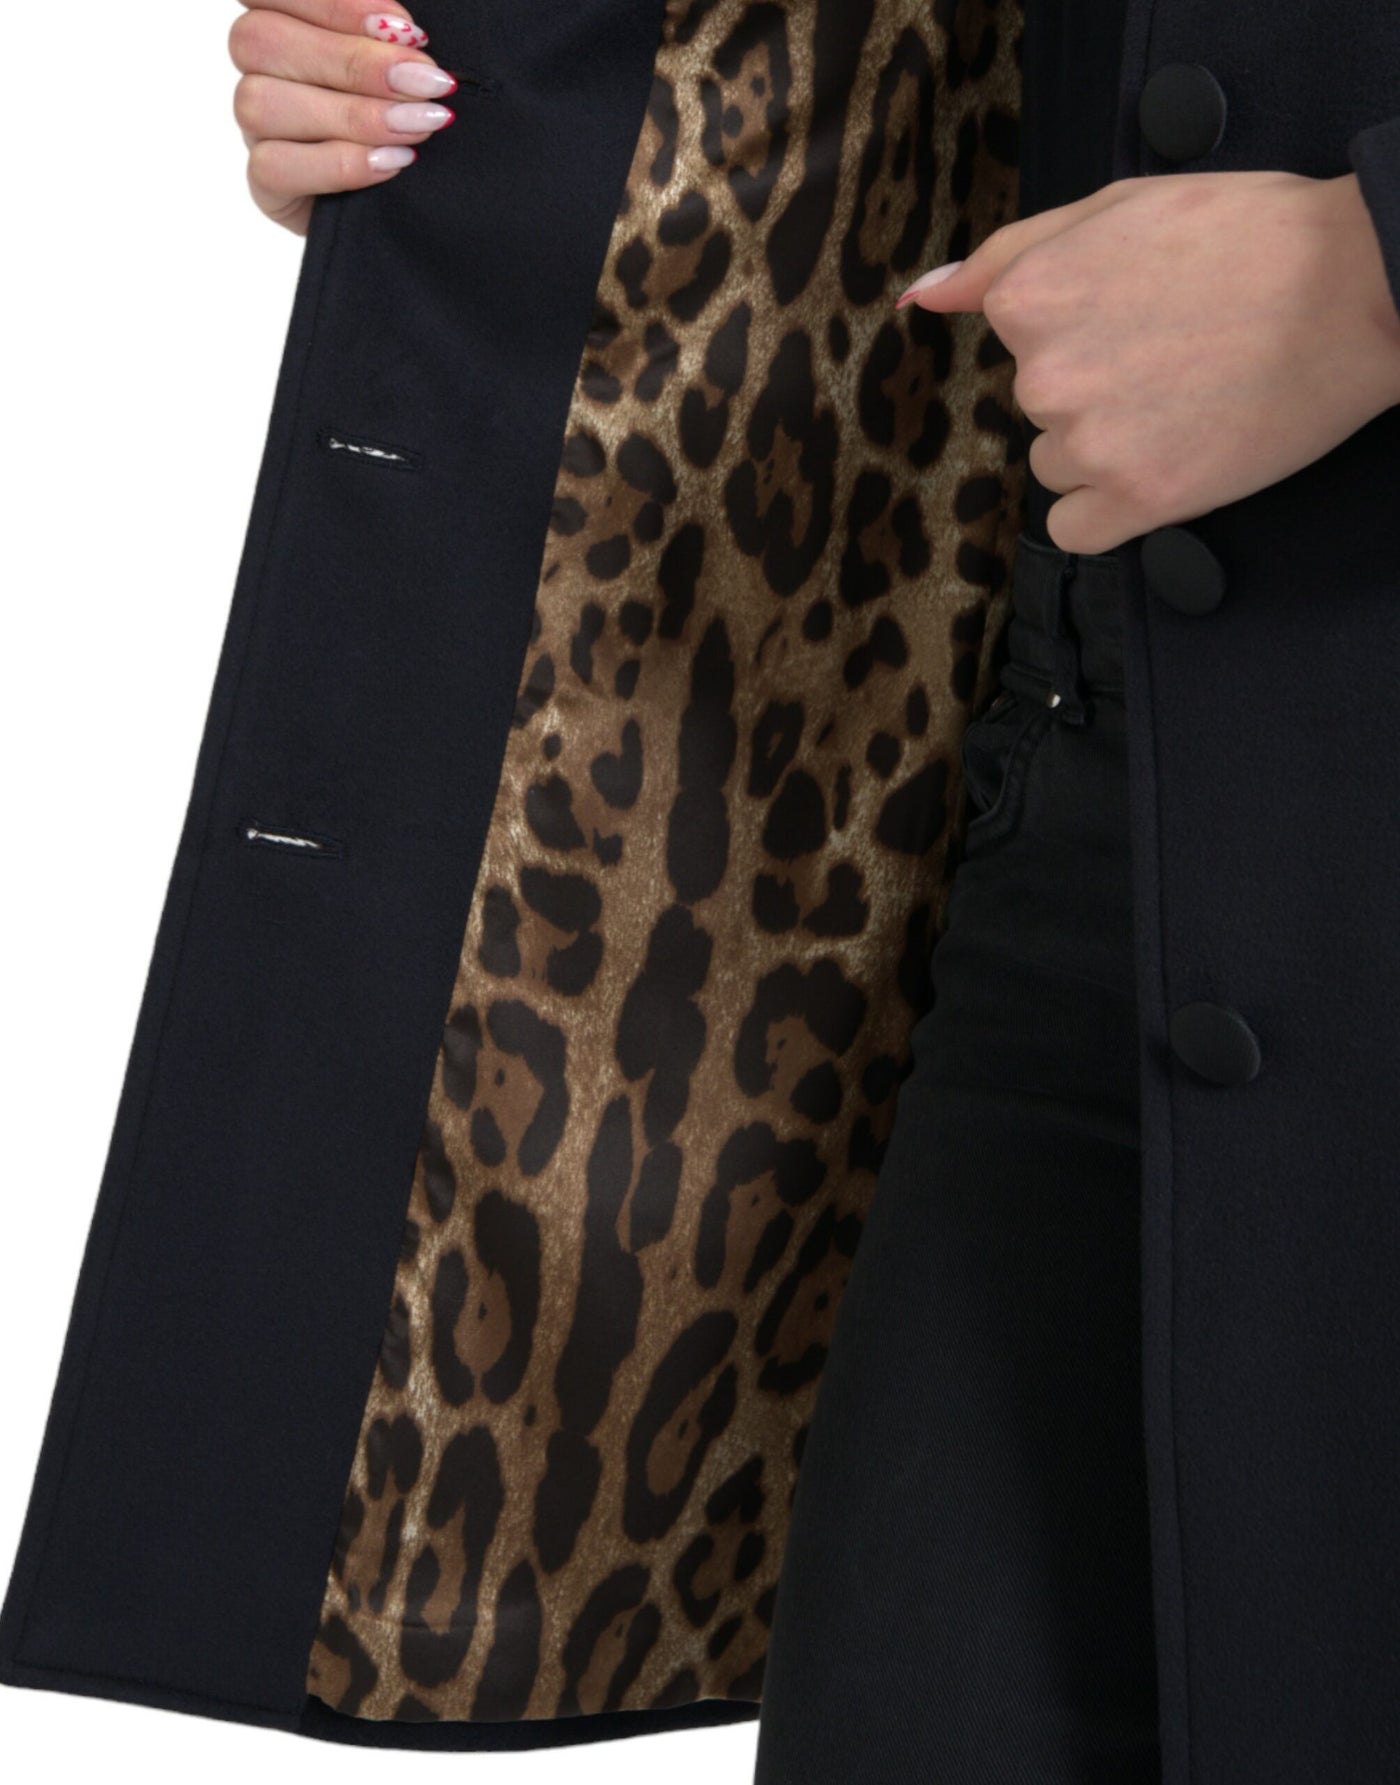 Dolce & Gabbana Elegant Virgin Wool Blend Black Blazer